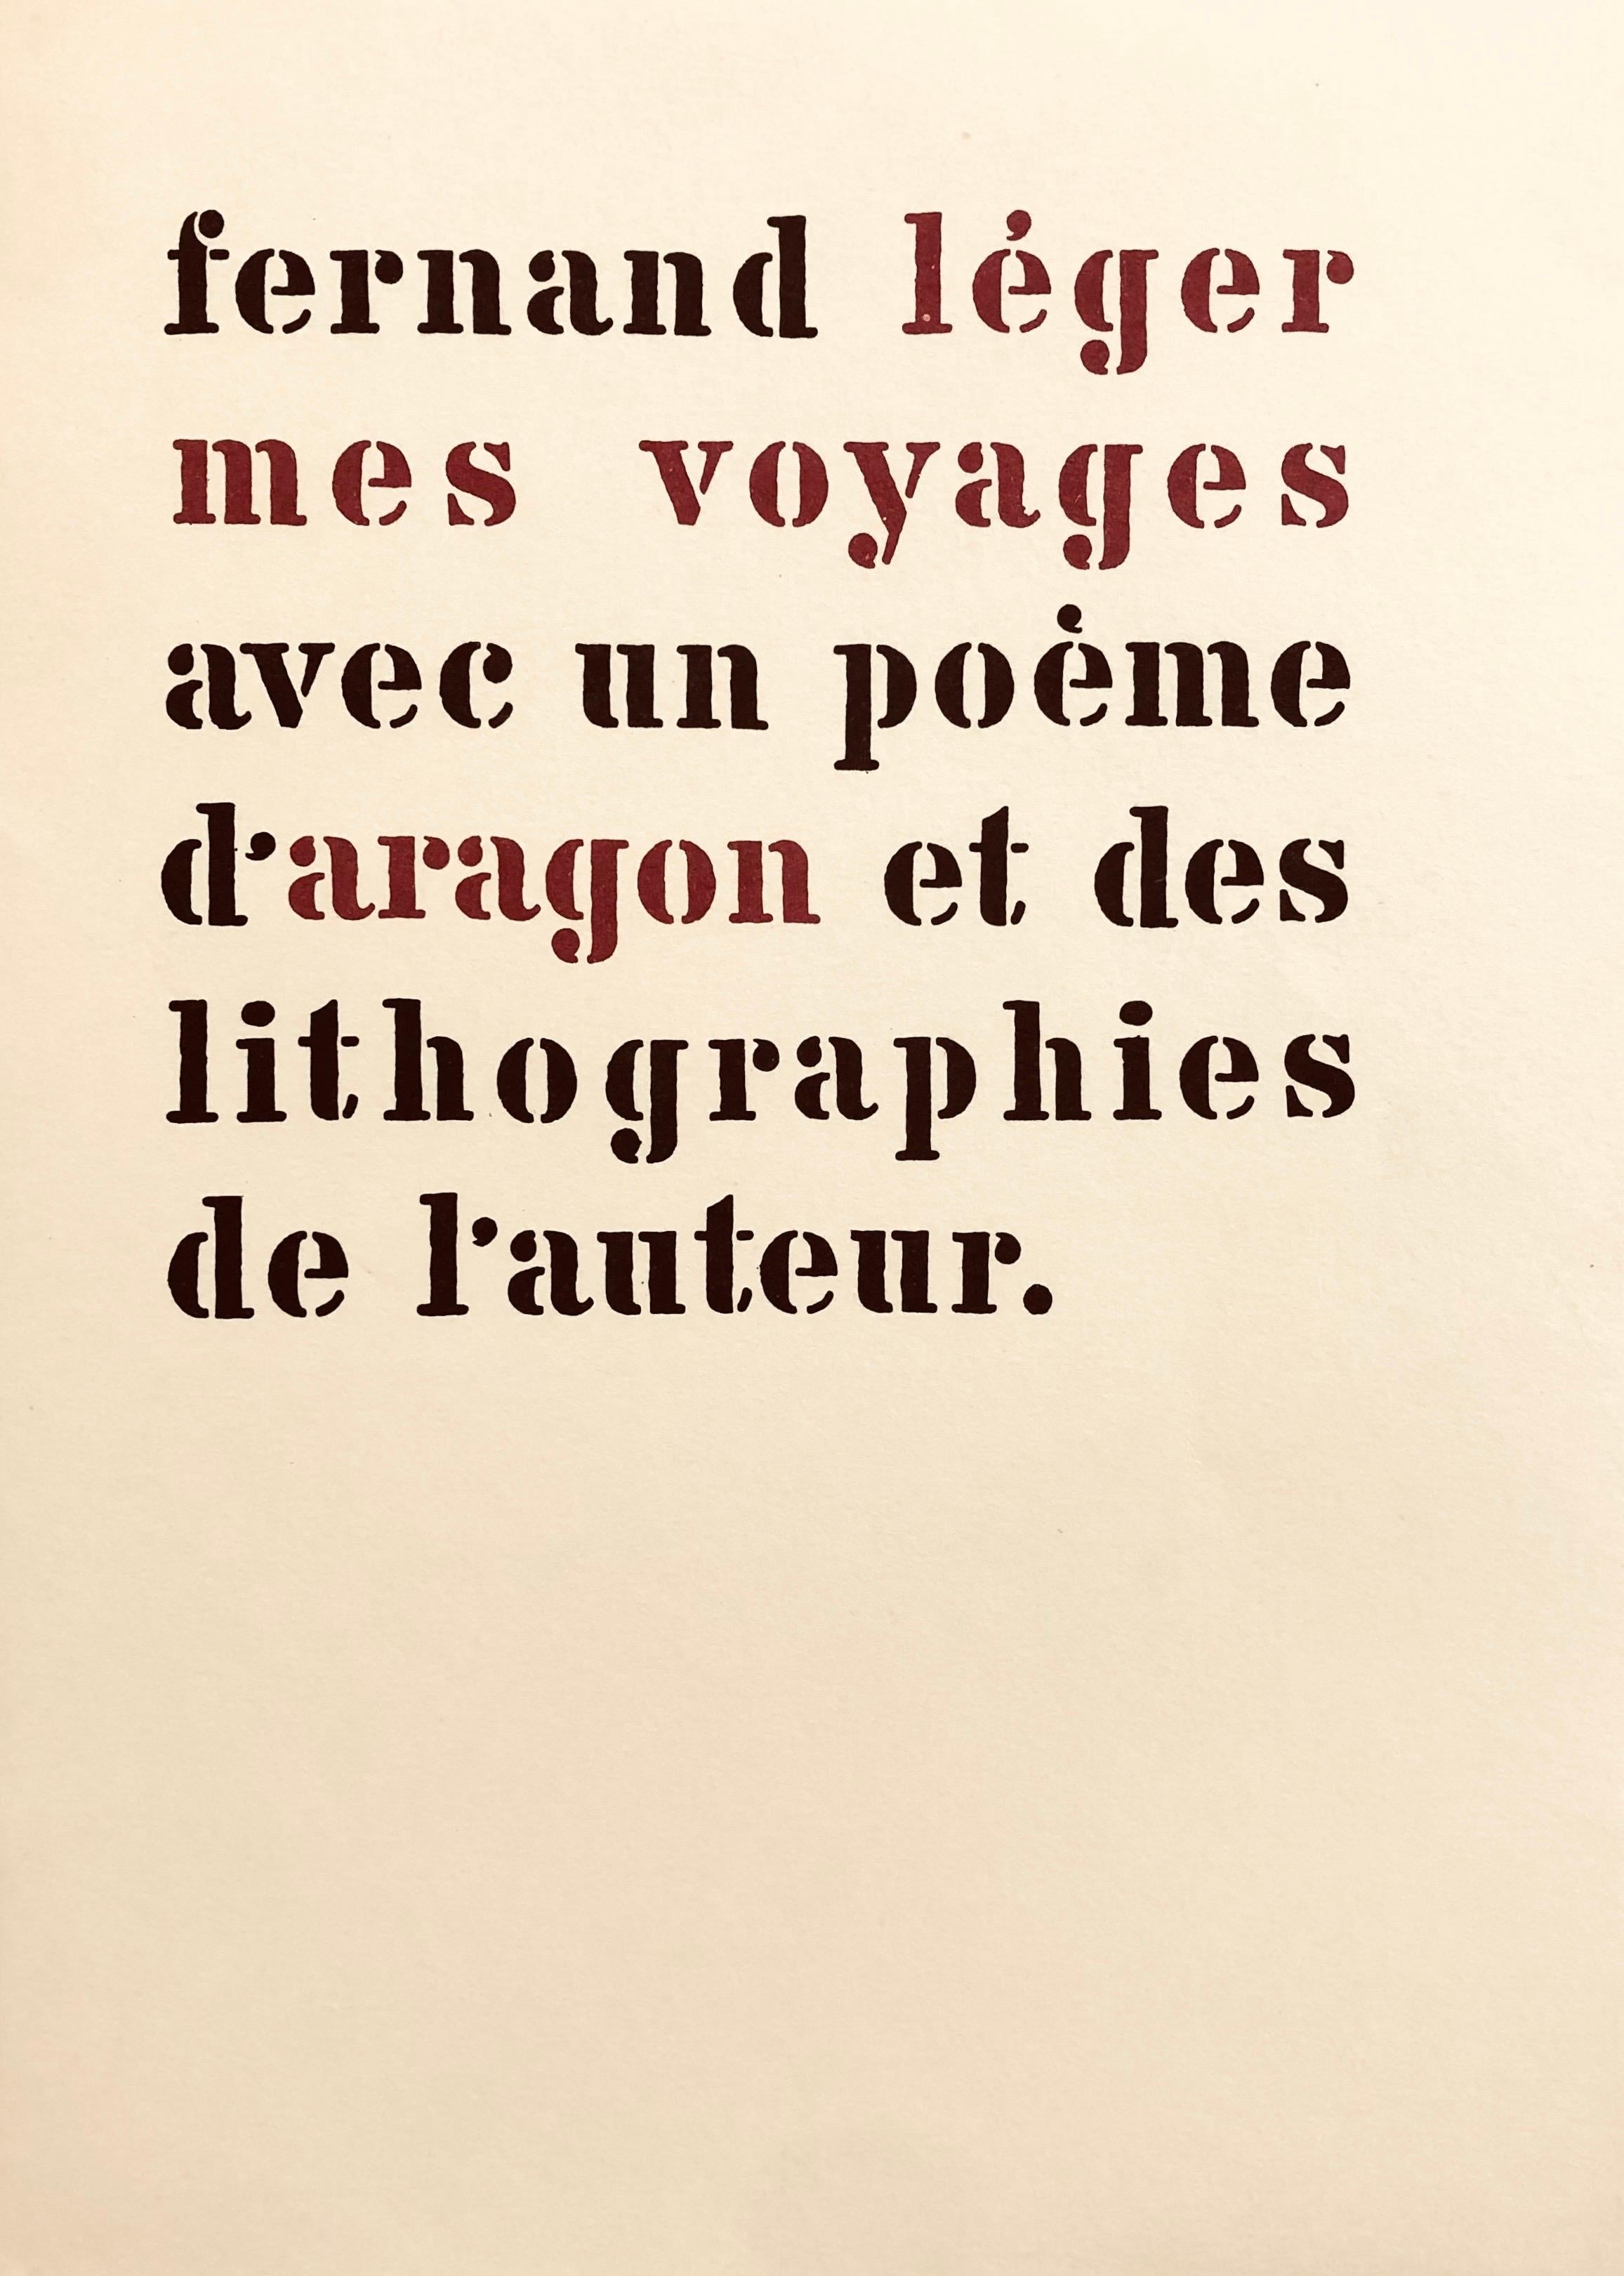 Léger, Composition, mes voyages (after) For Sale 1